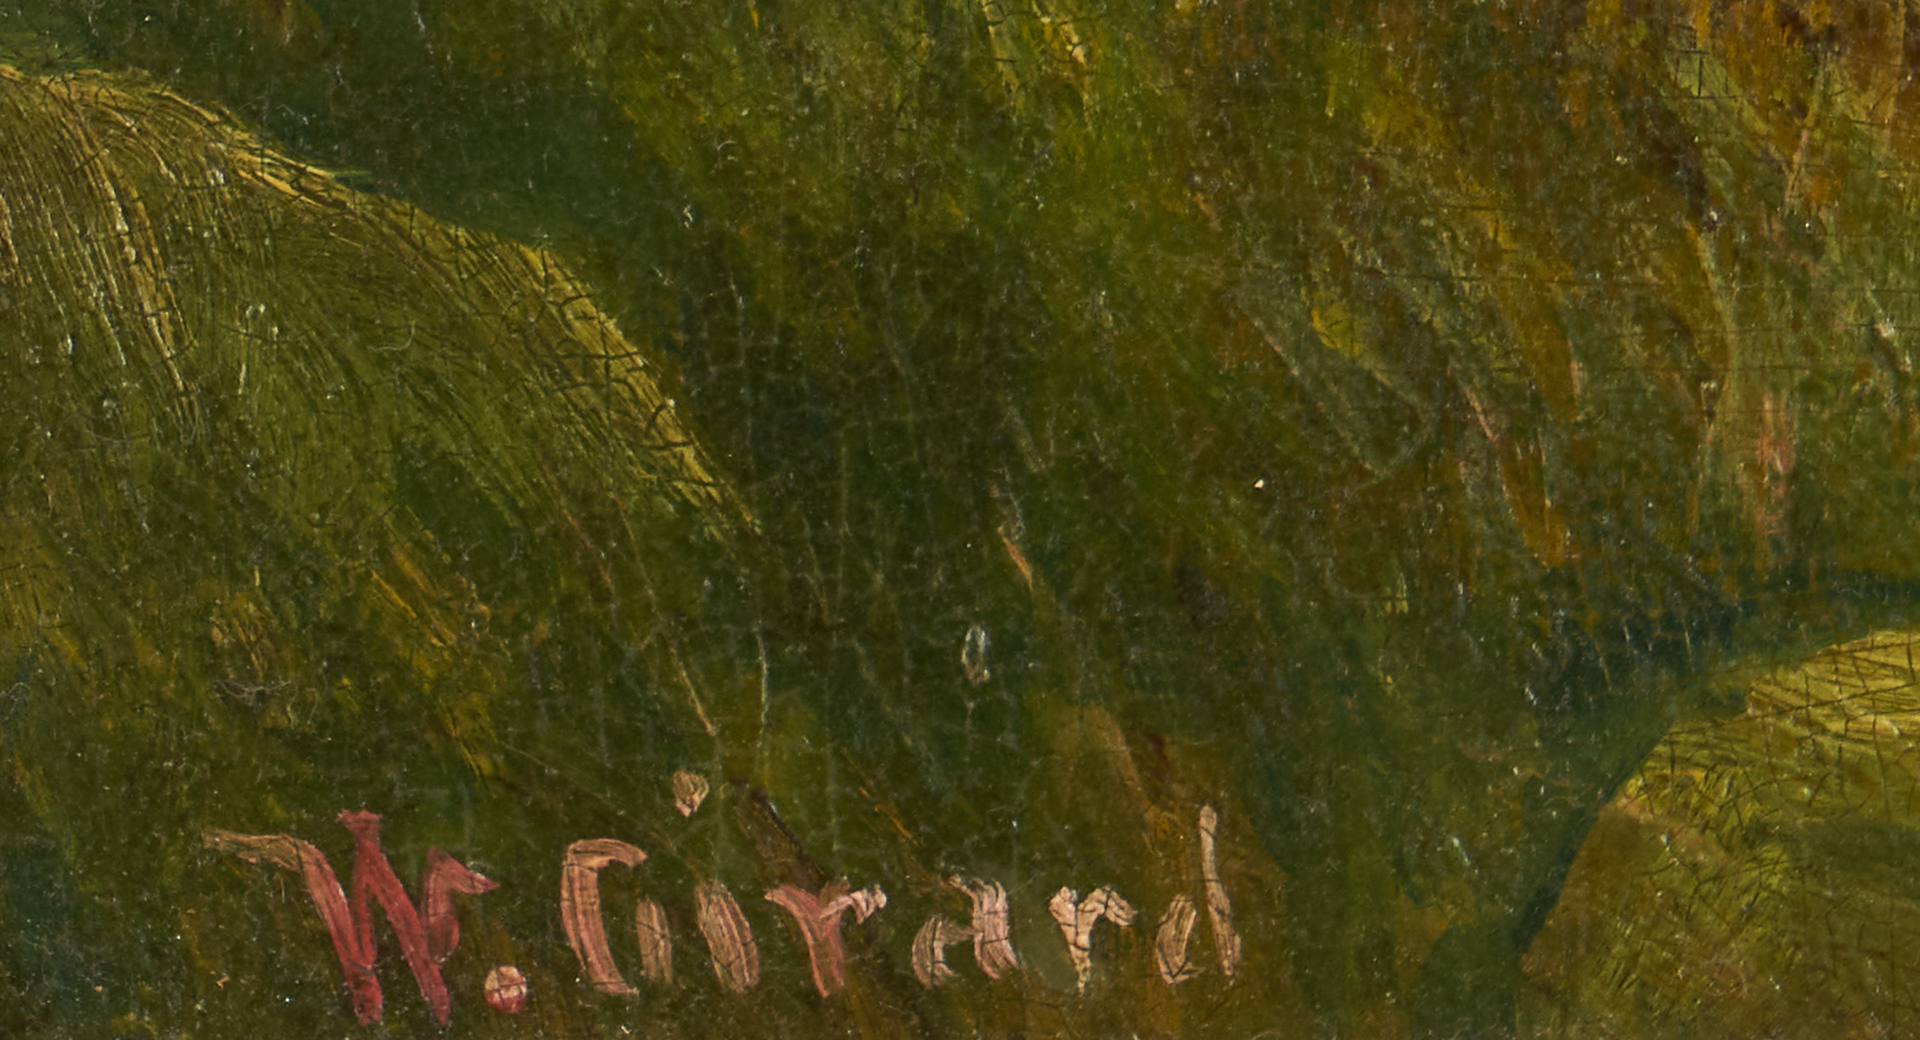 Lot 993: 2 TN Oil Paintings, incl. W. Girard, C. Hankins